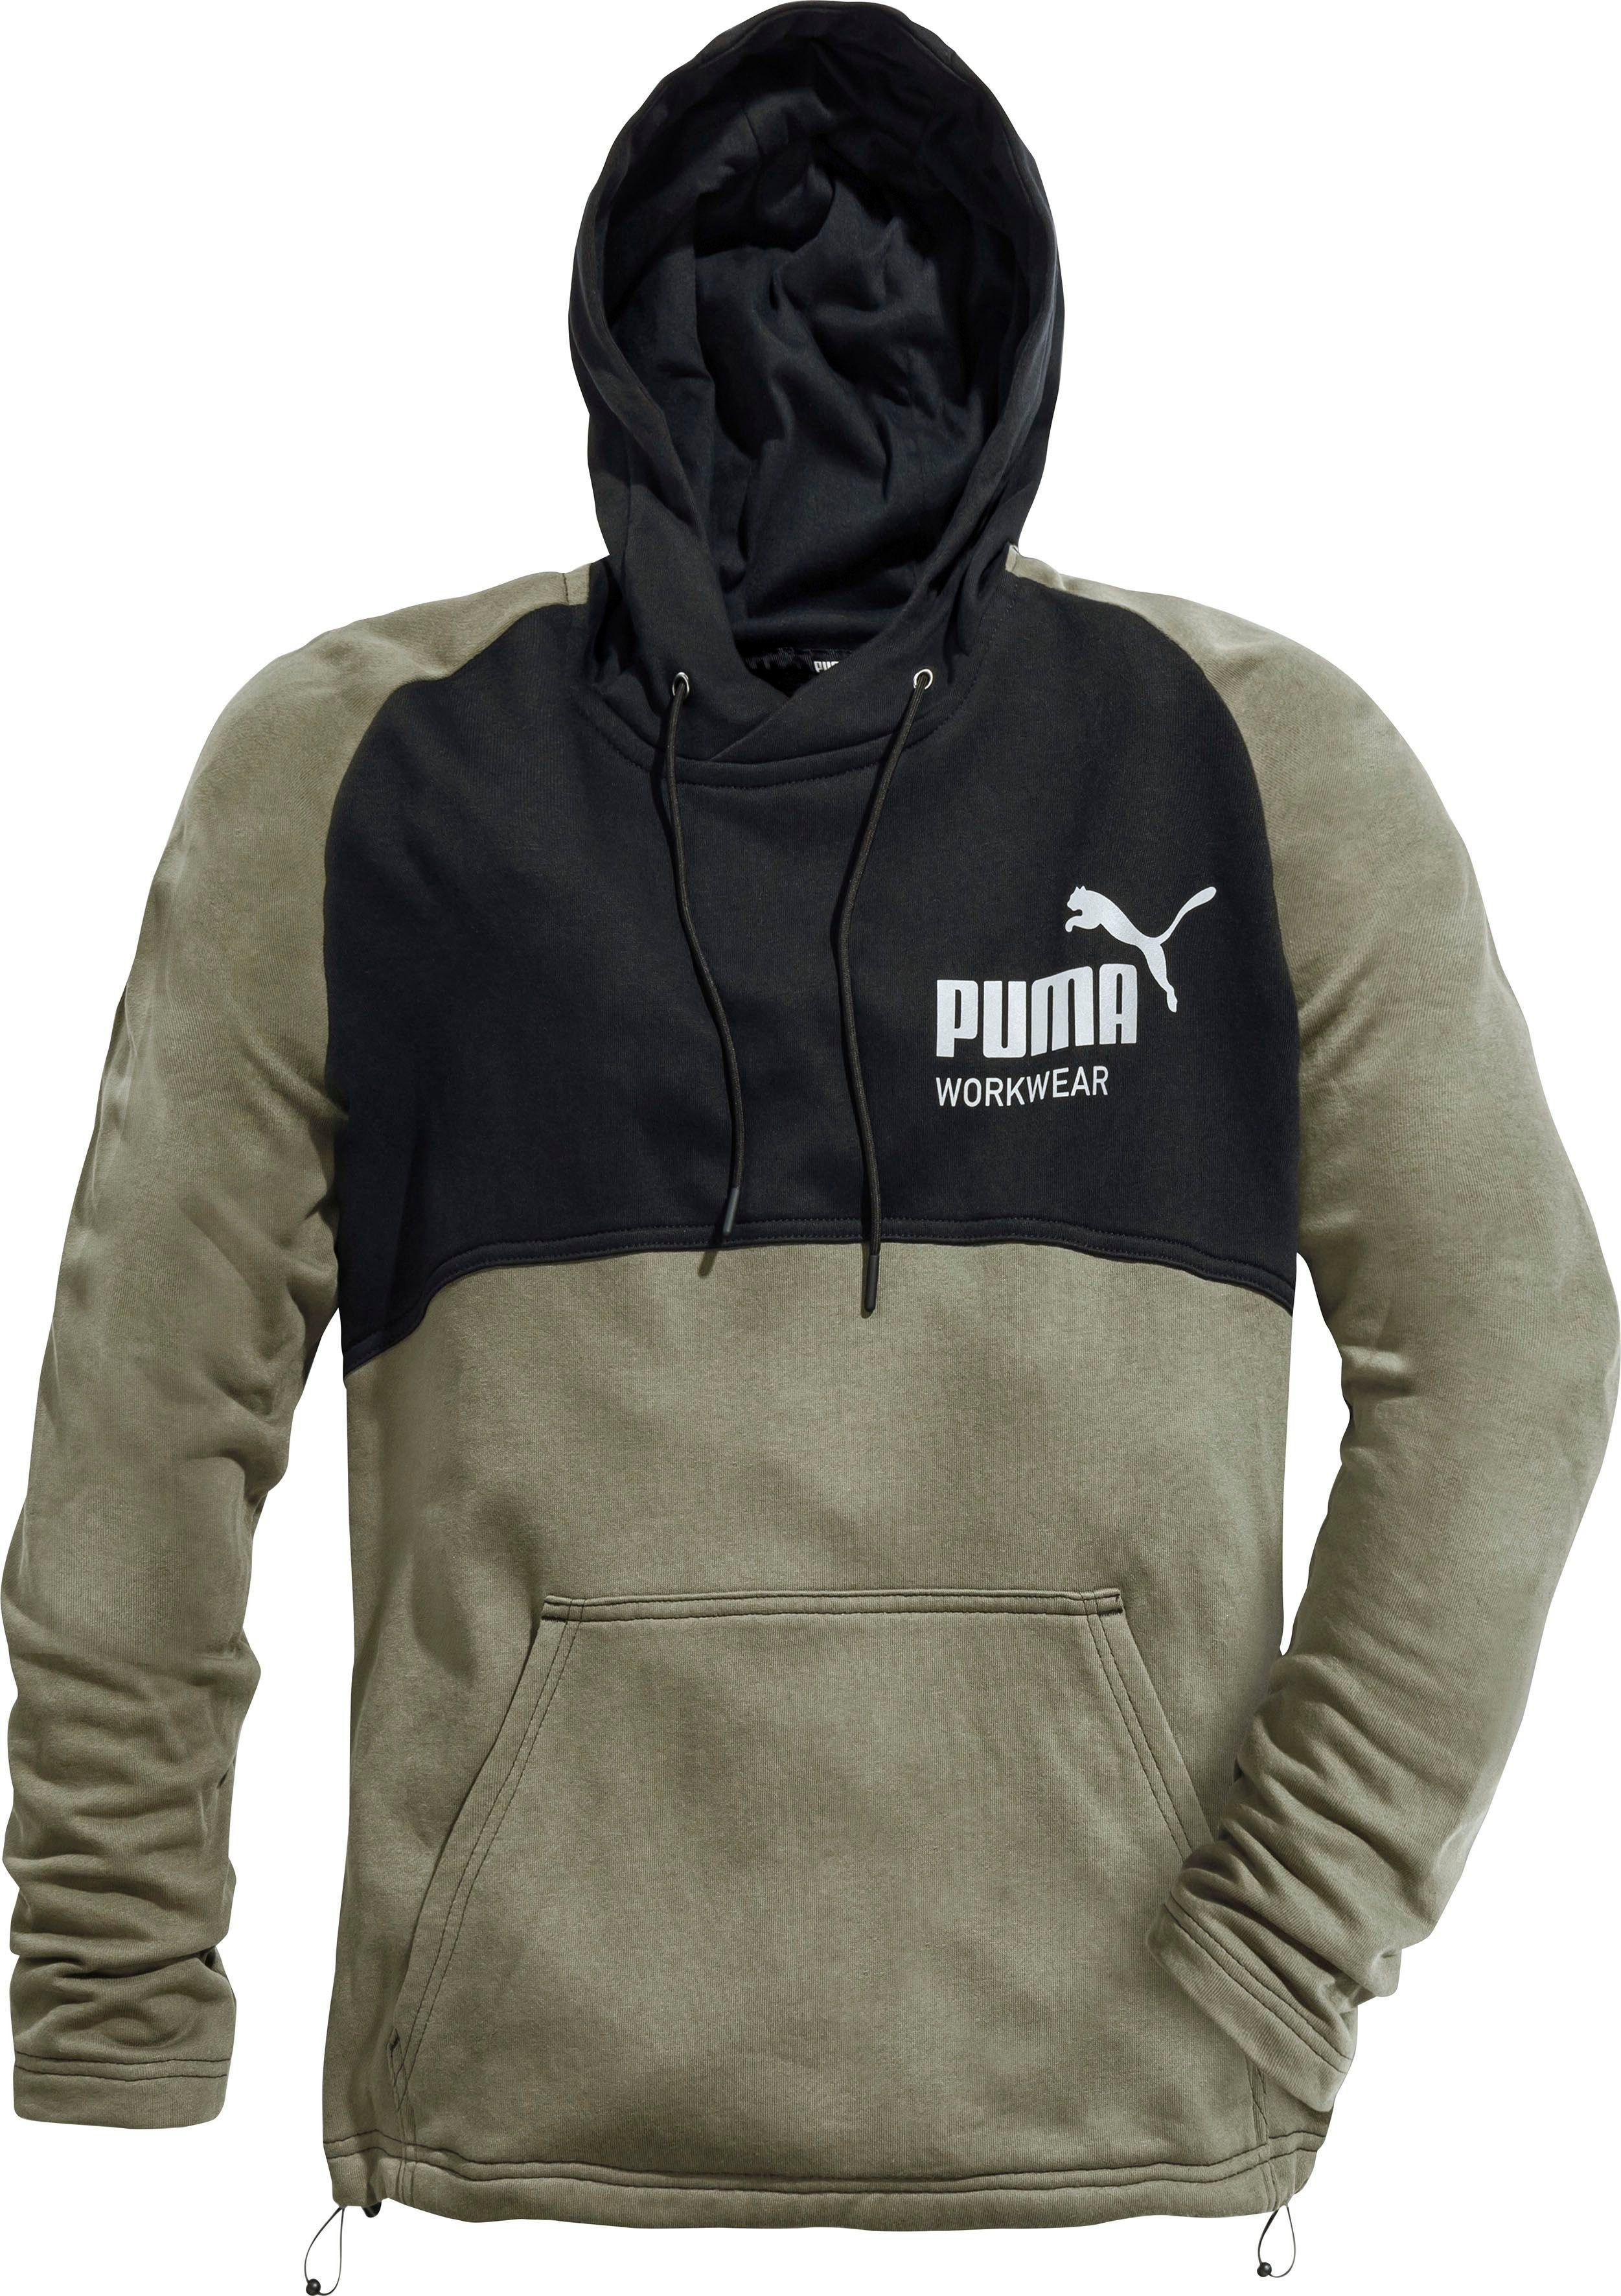 PUMA Workwear Hoodie CHAMP Workwear, oliv-carbon oliv/carbon